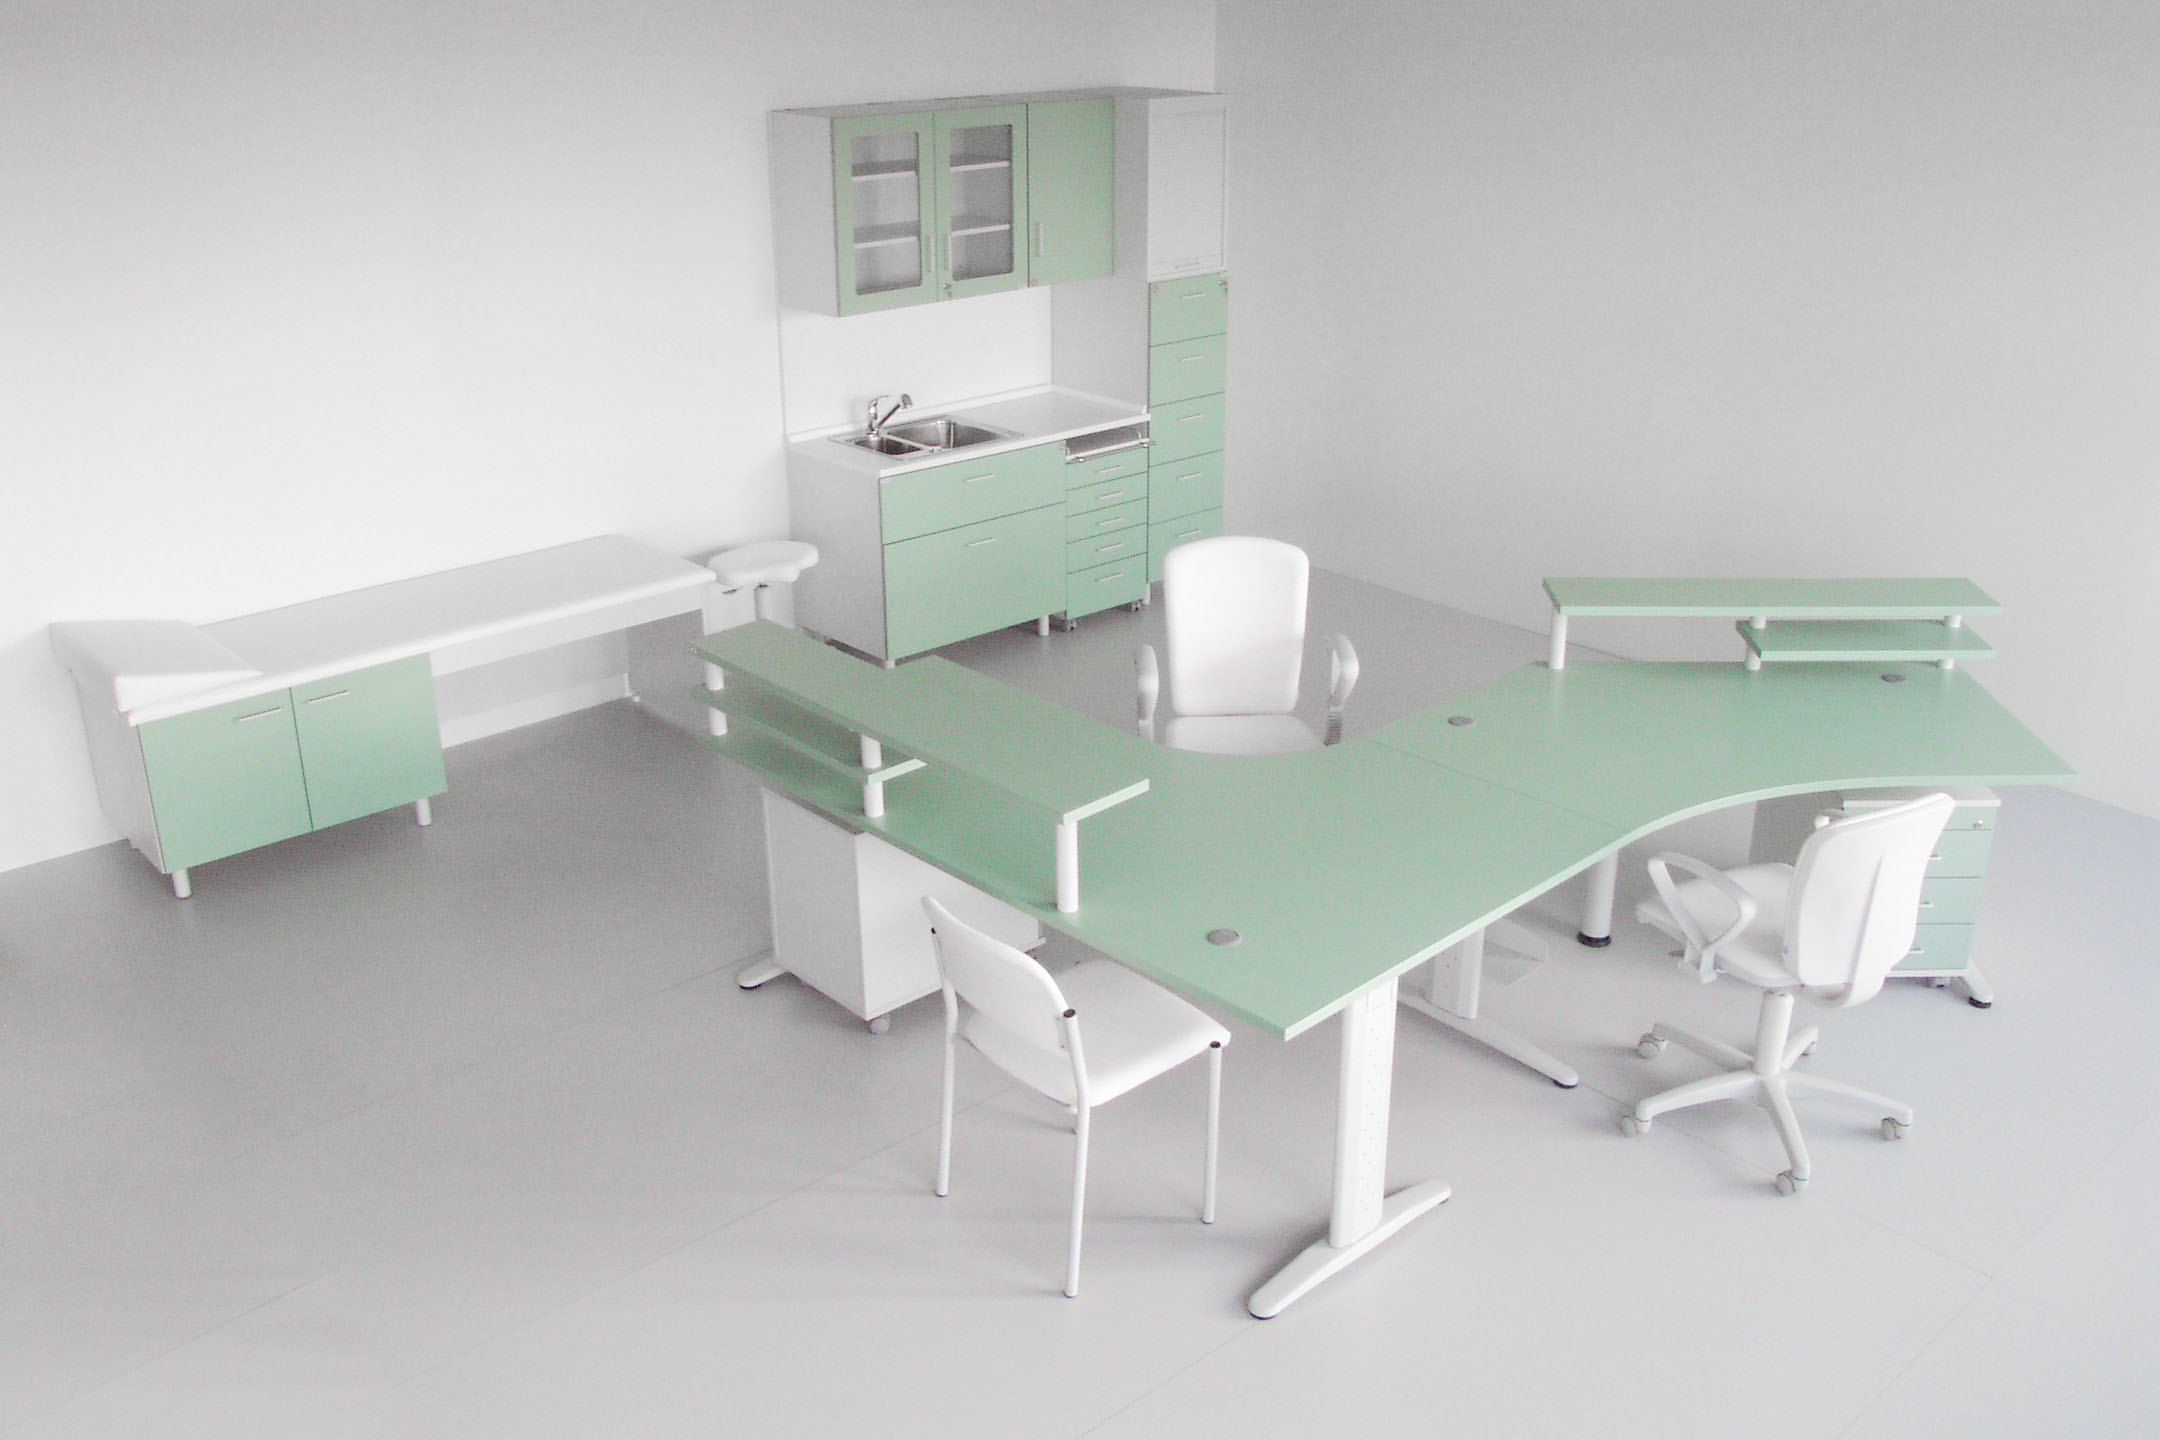 Praktik II: furniture for healthcare facilities